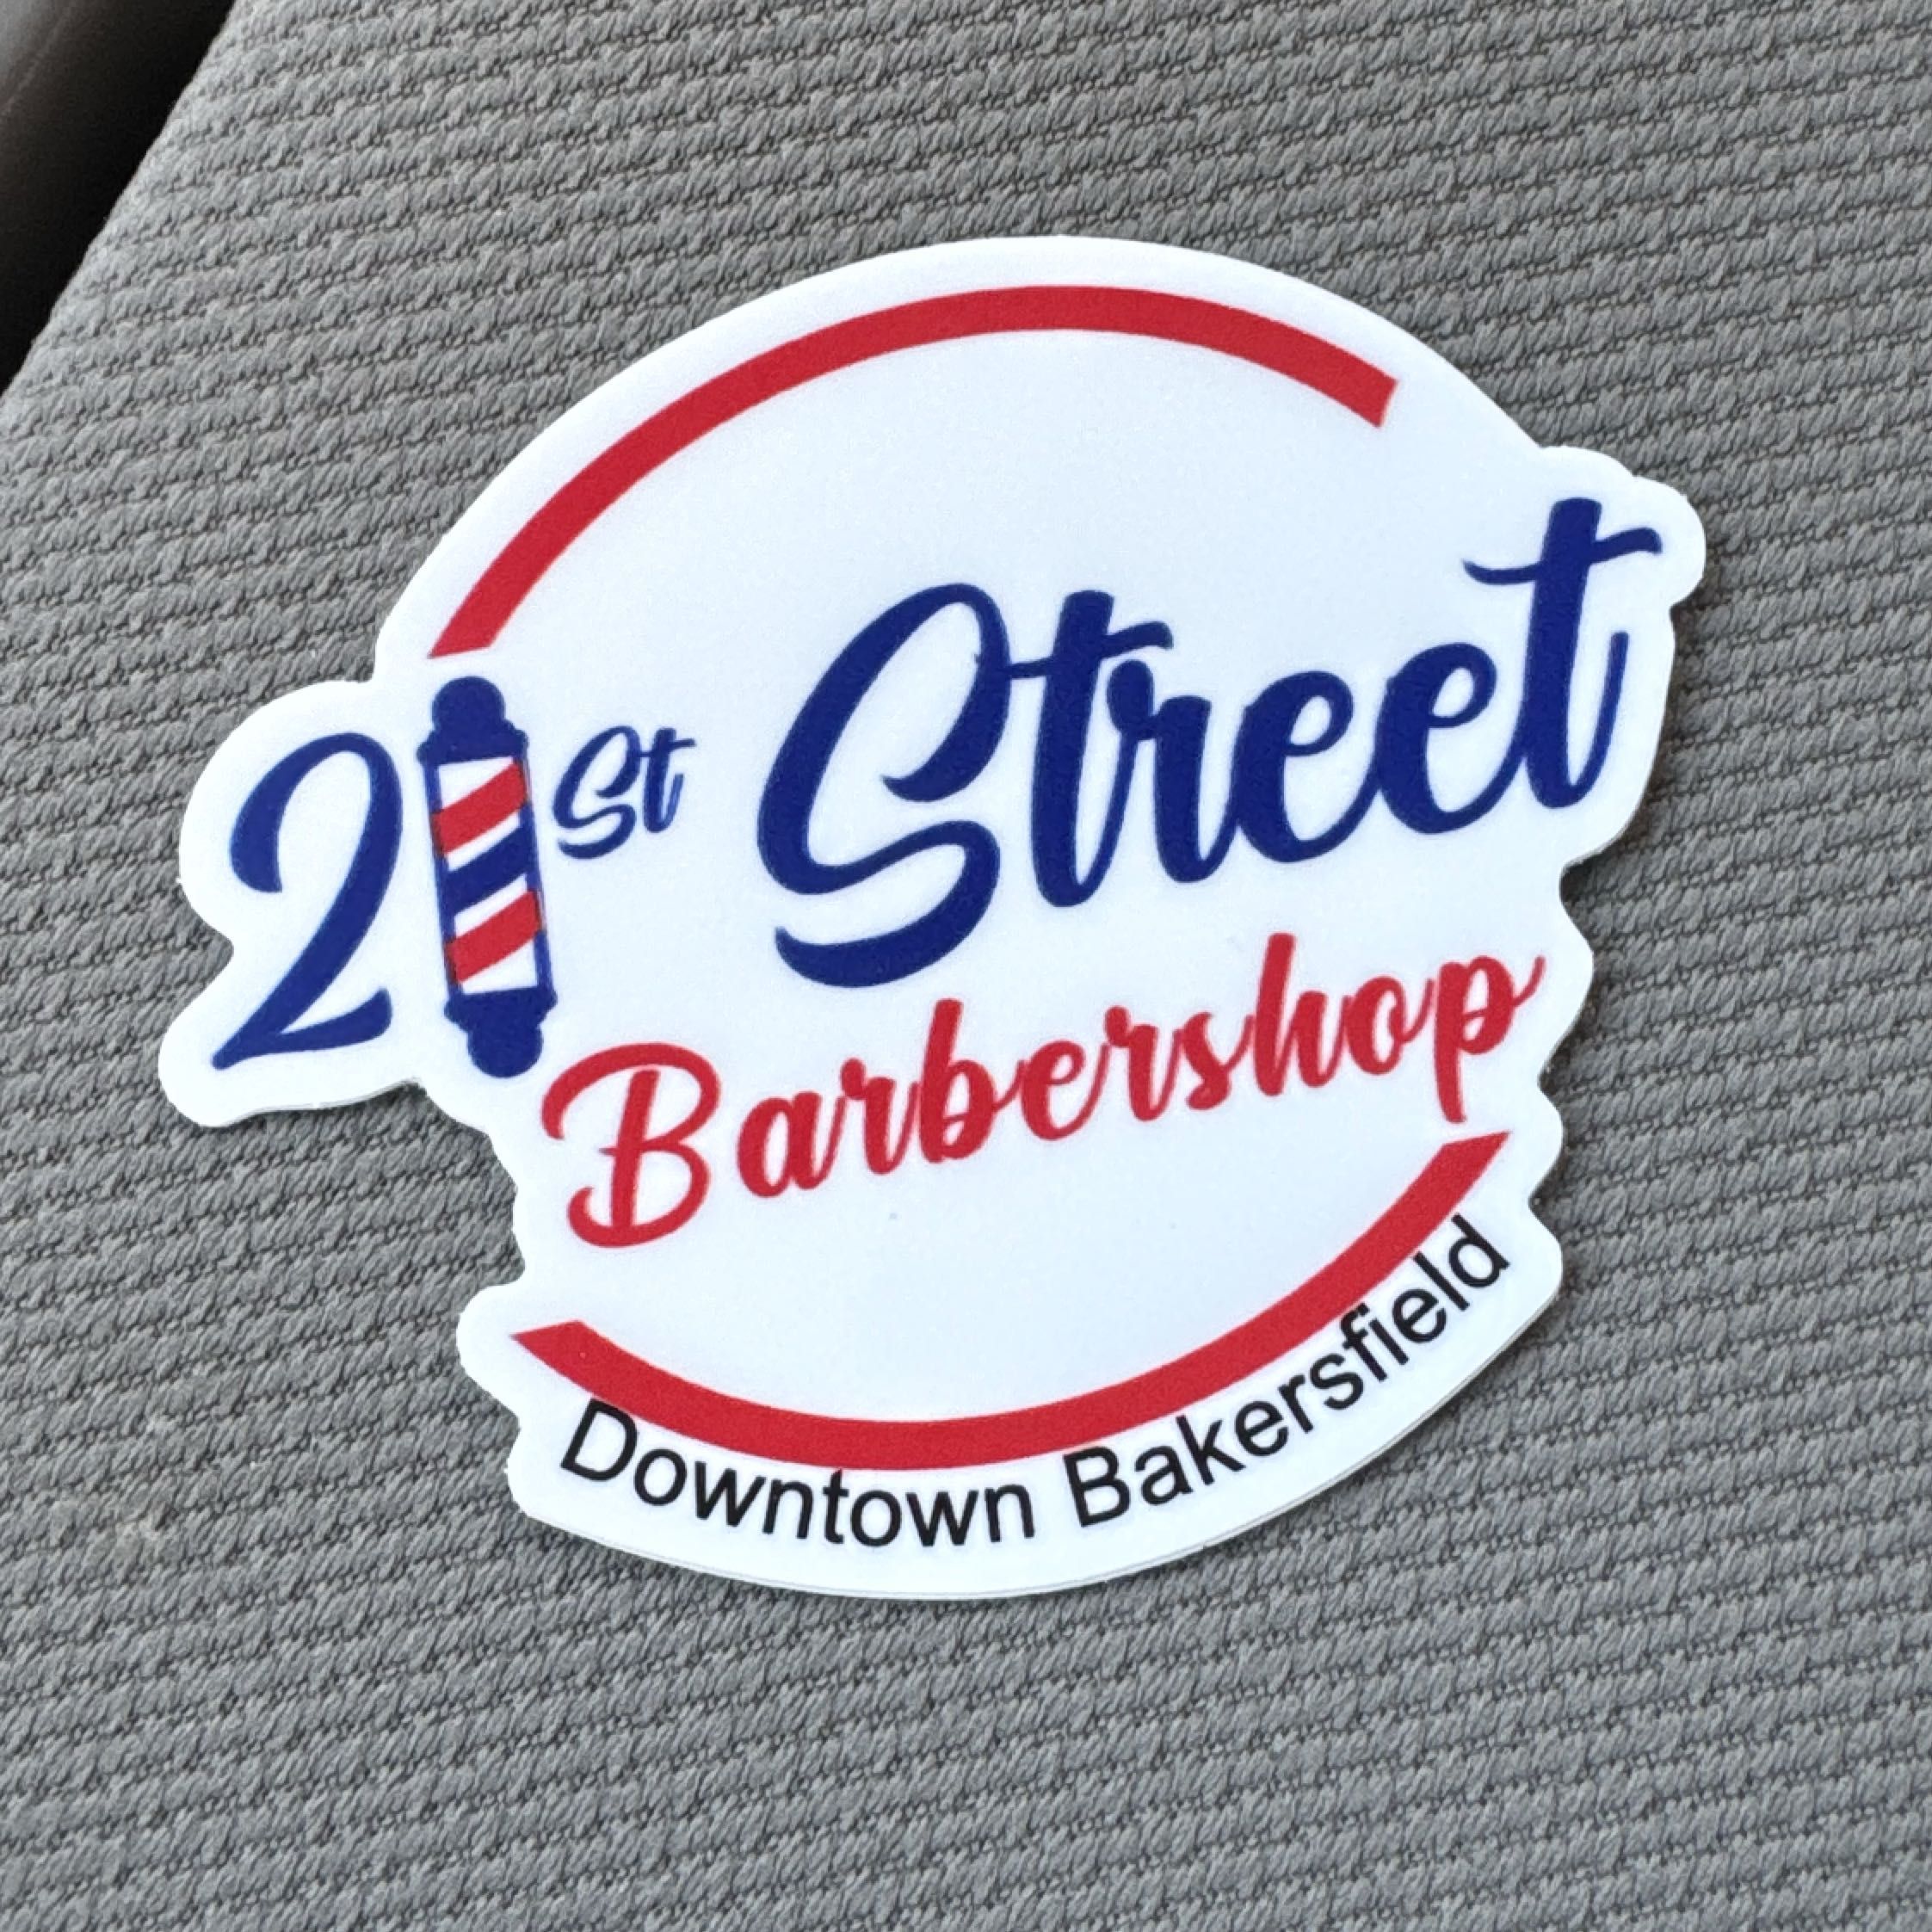 Danny Medina @ 21st Street Barbershop, 1621 21st St, Bakersfield, 93301